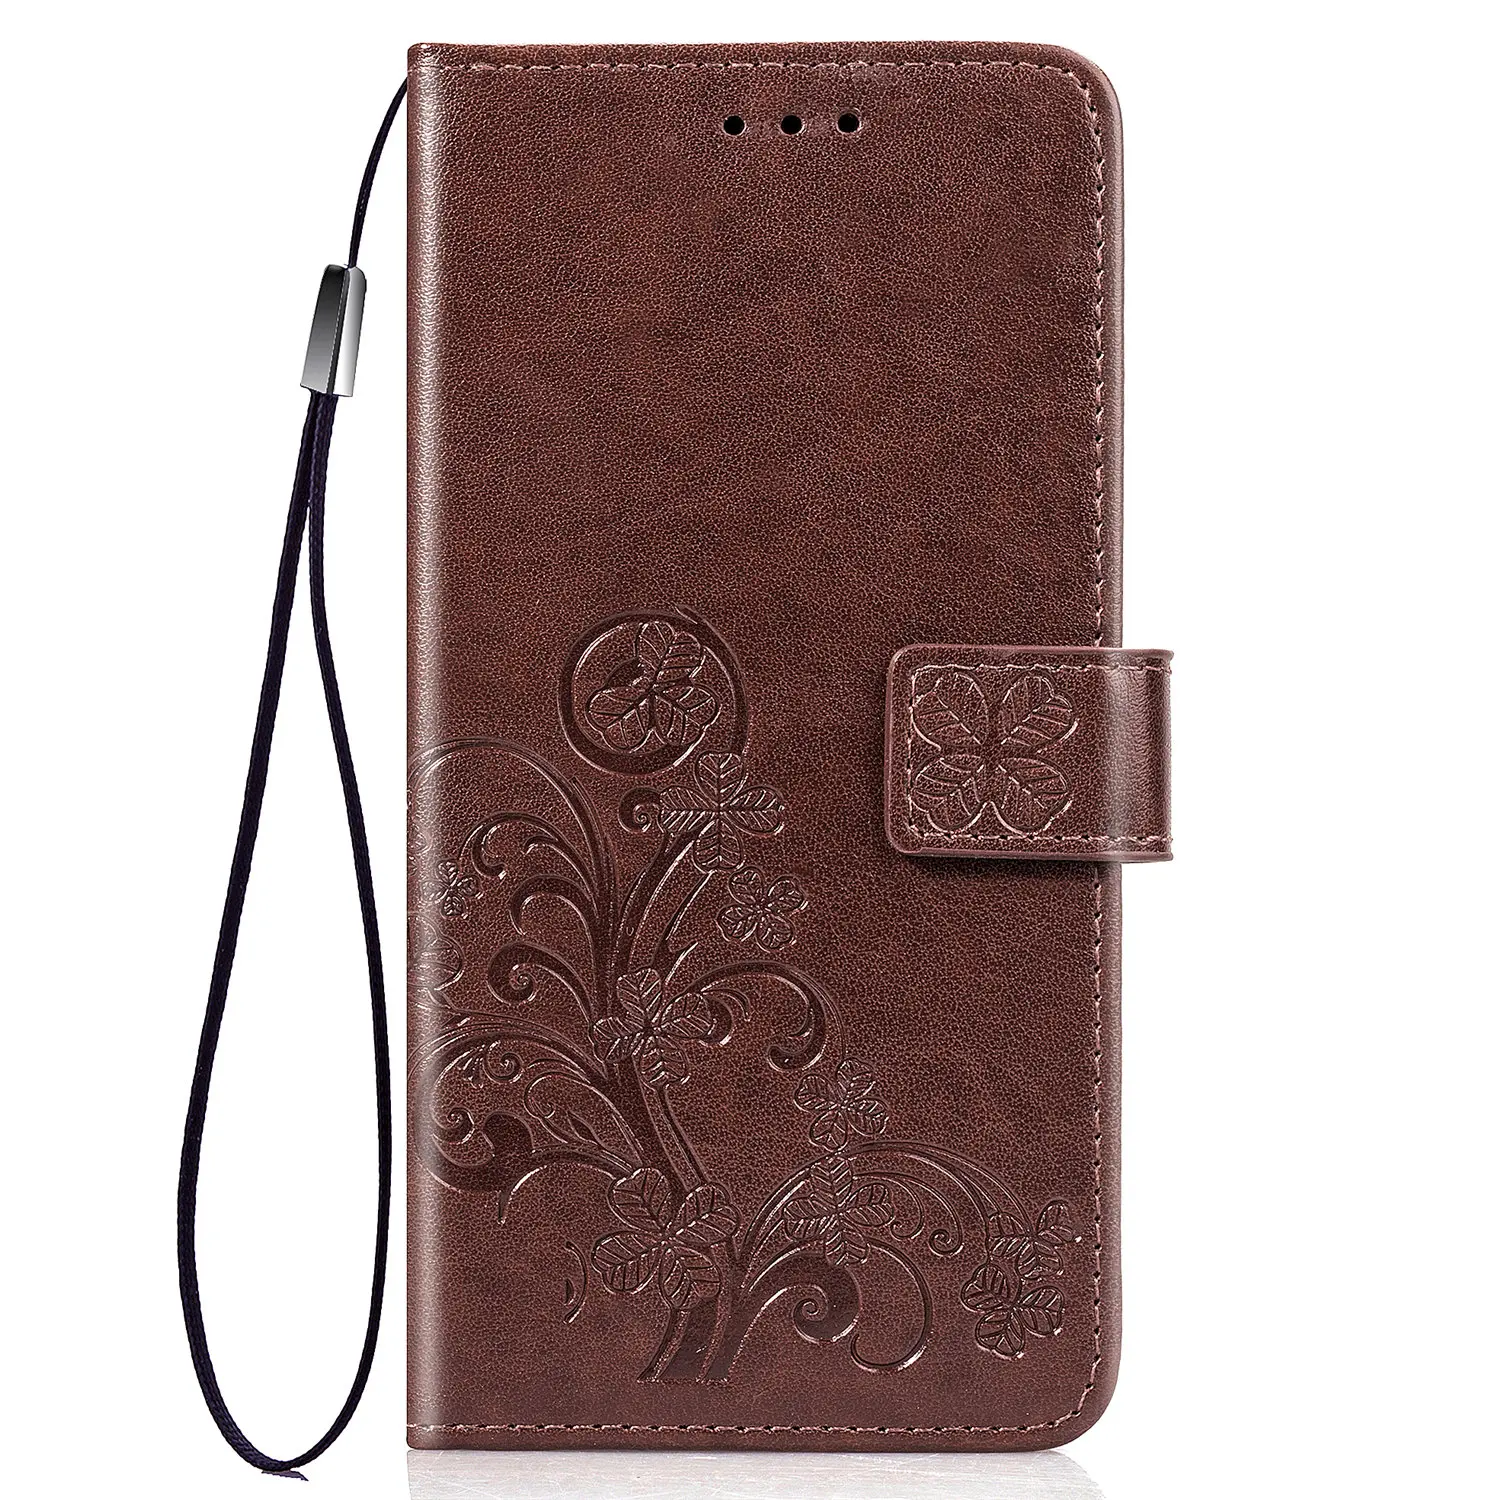 

Flip Case for Sony Xperia M5 Dual E5603 E5606 E5653 Phone Bag Book Cover for Sony Xperia M5 Leather Soft TPU Silicone Case